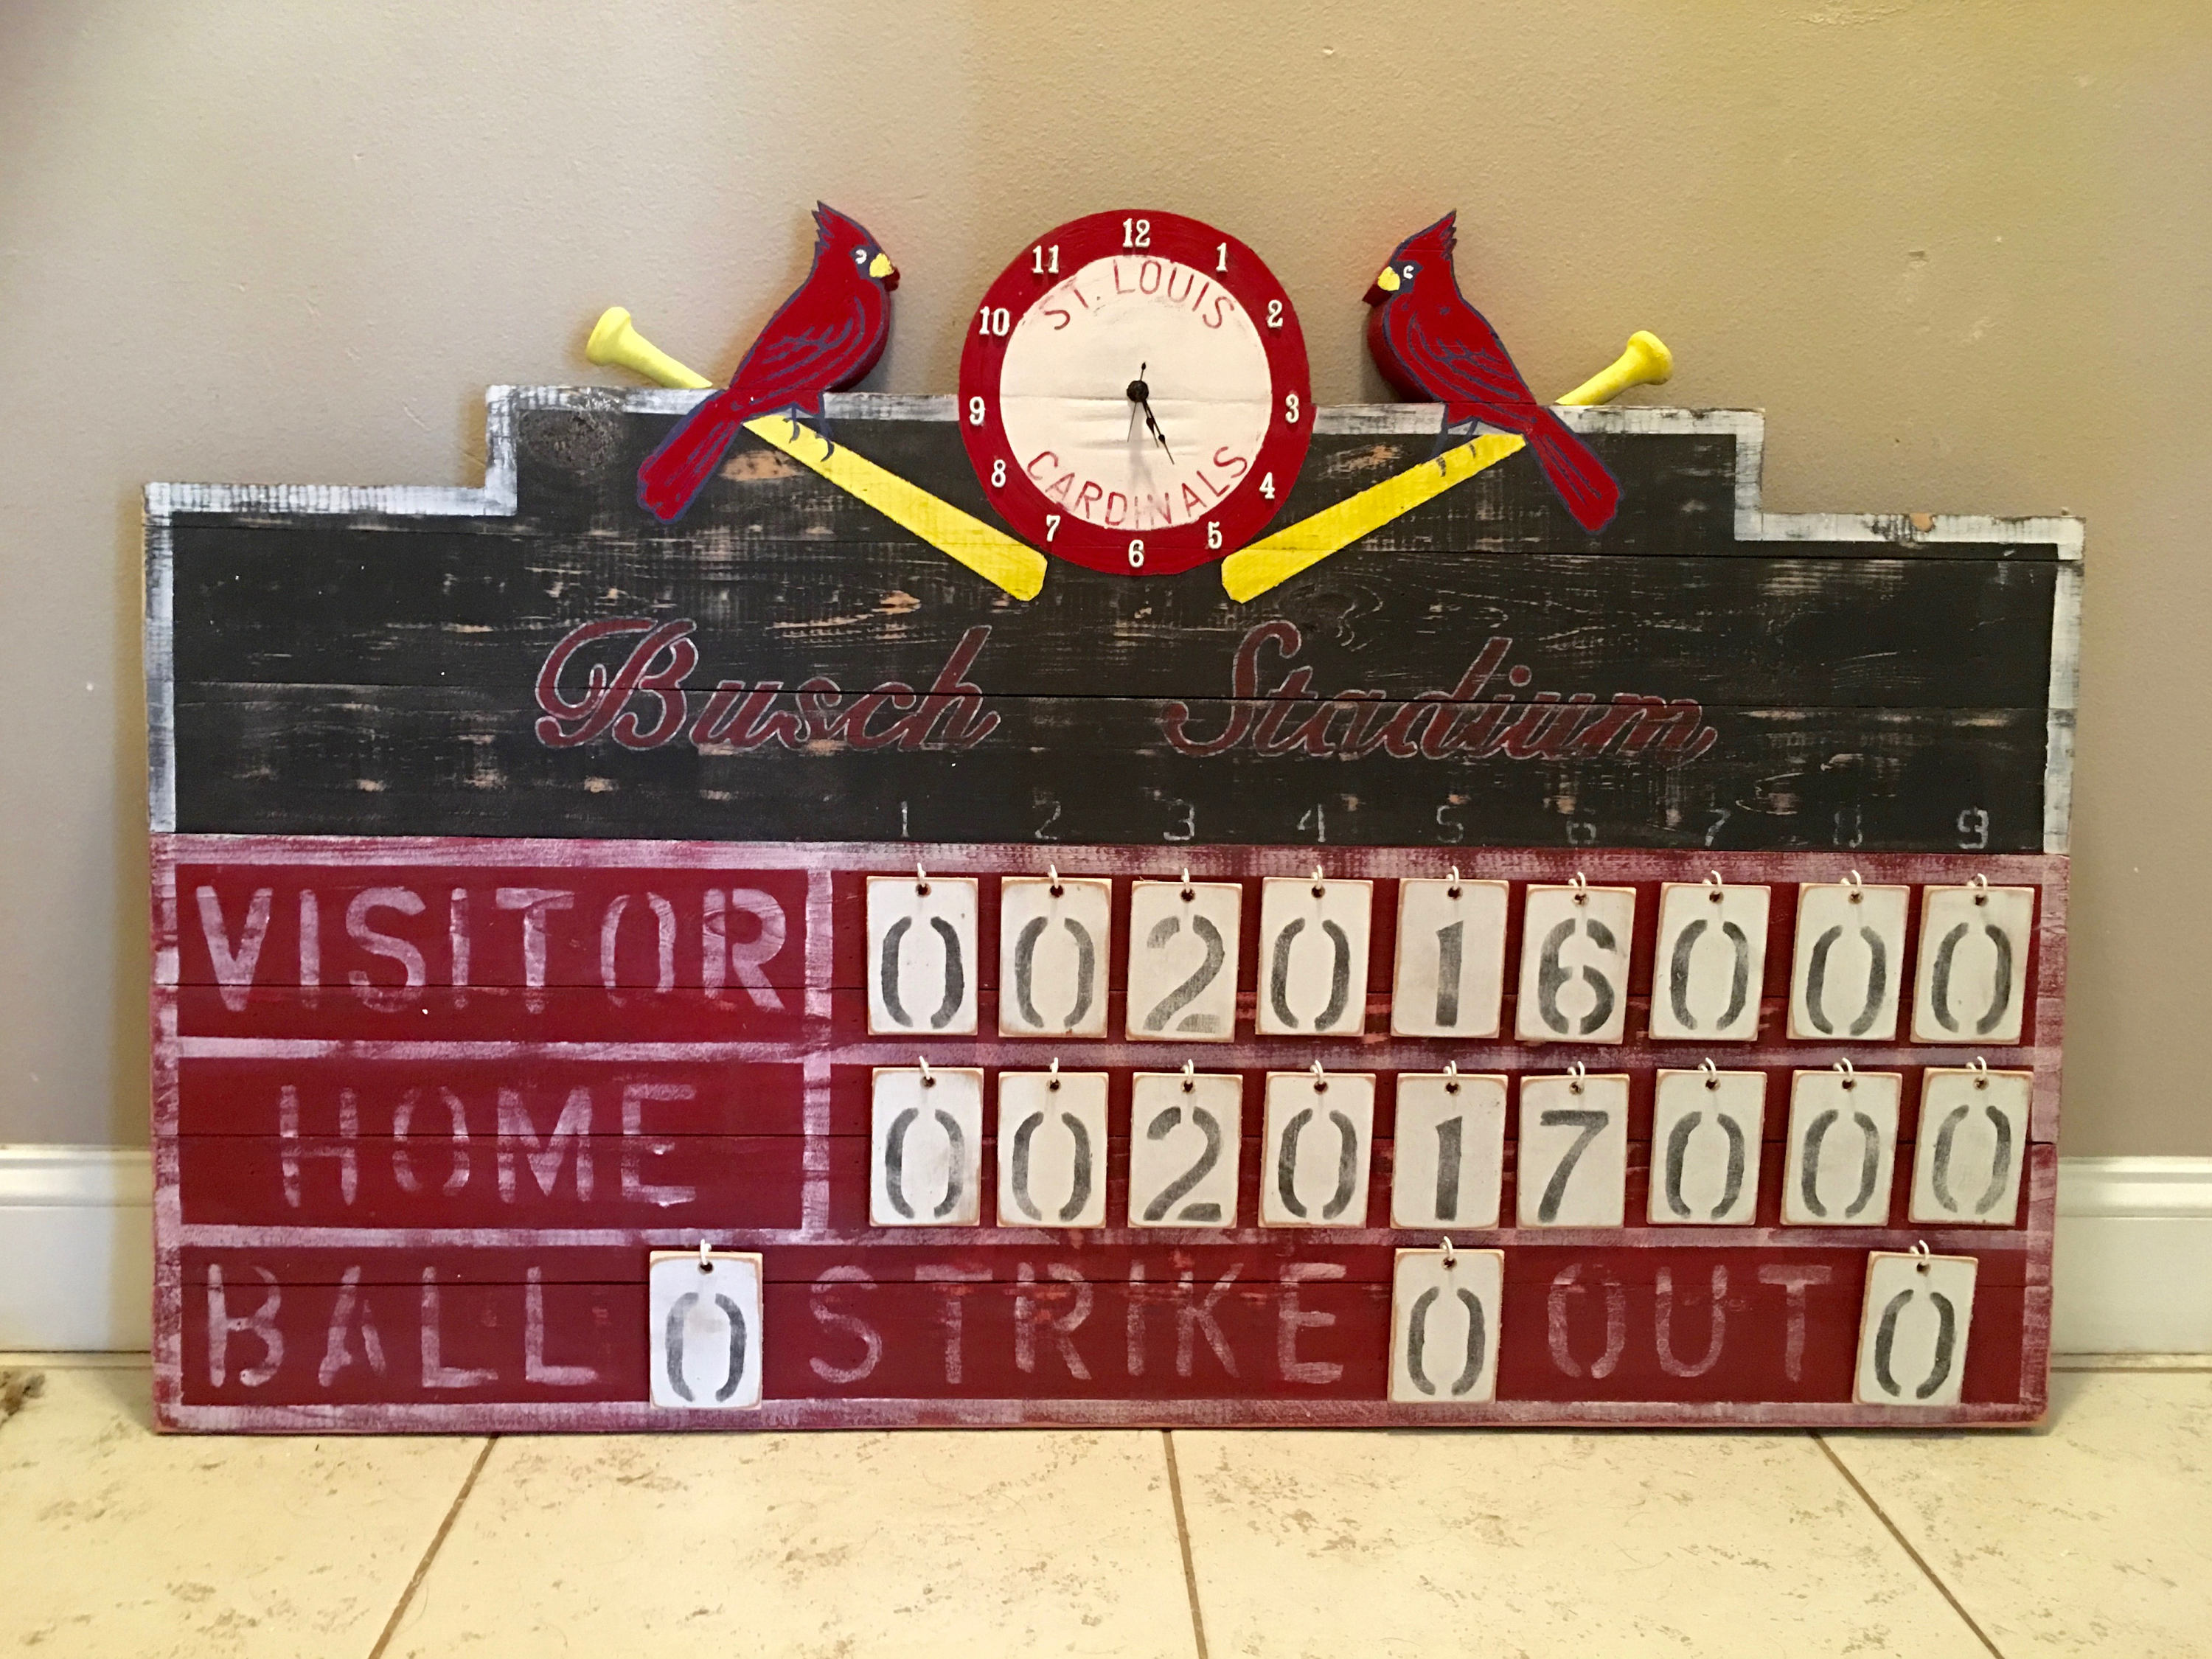 St Louis Cardinals Sports rustic Baseball Team scoreboard, Vintage style